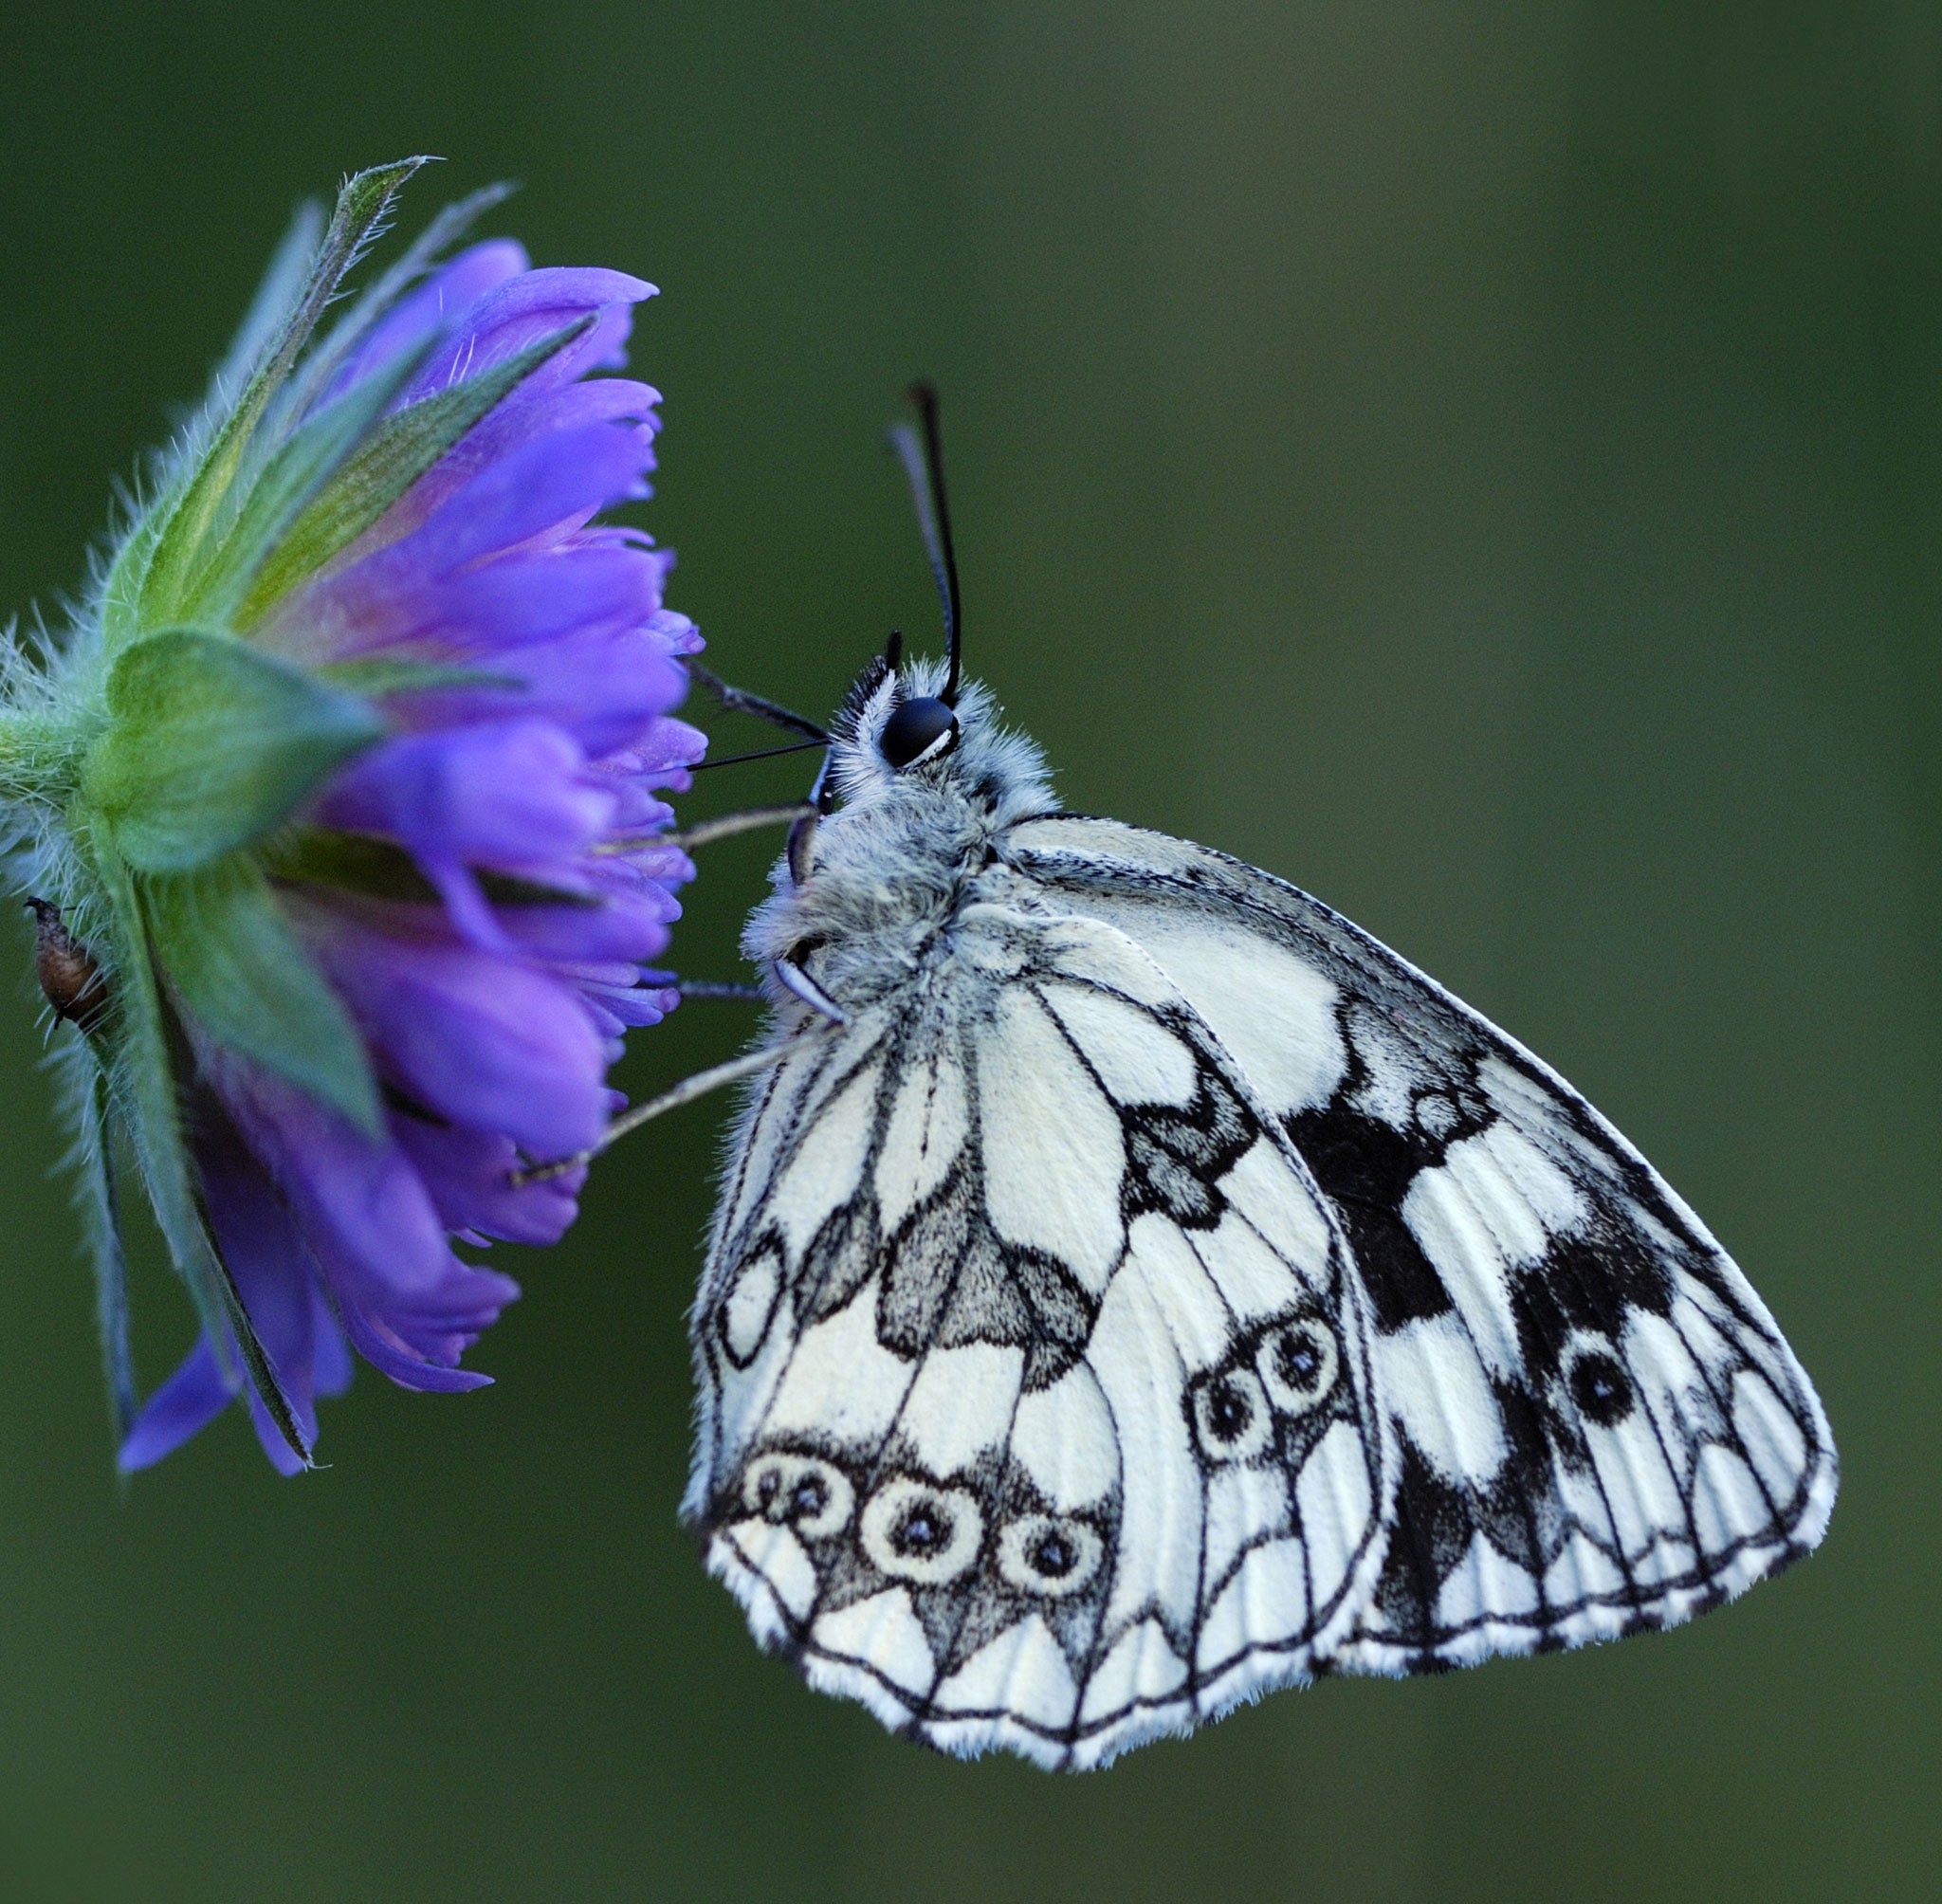 All a-flutter: Marbled White Butterfly (Melanargia galathea) resting on a flower